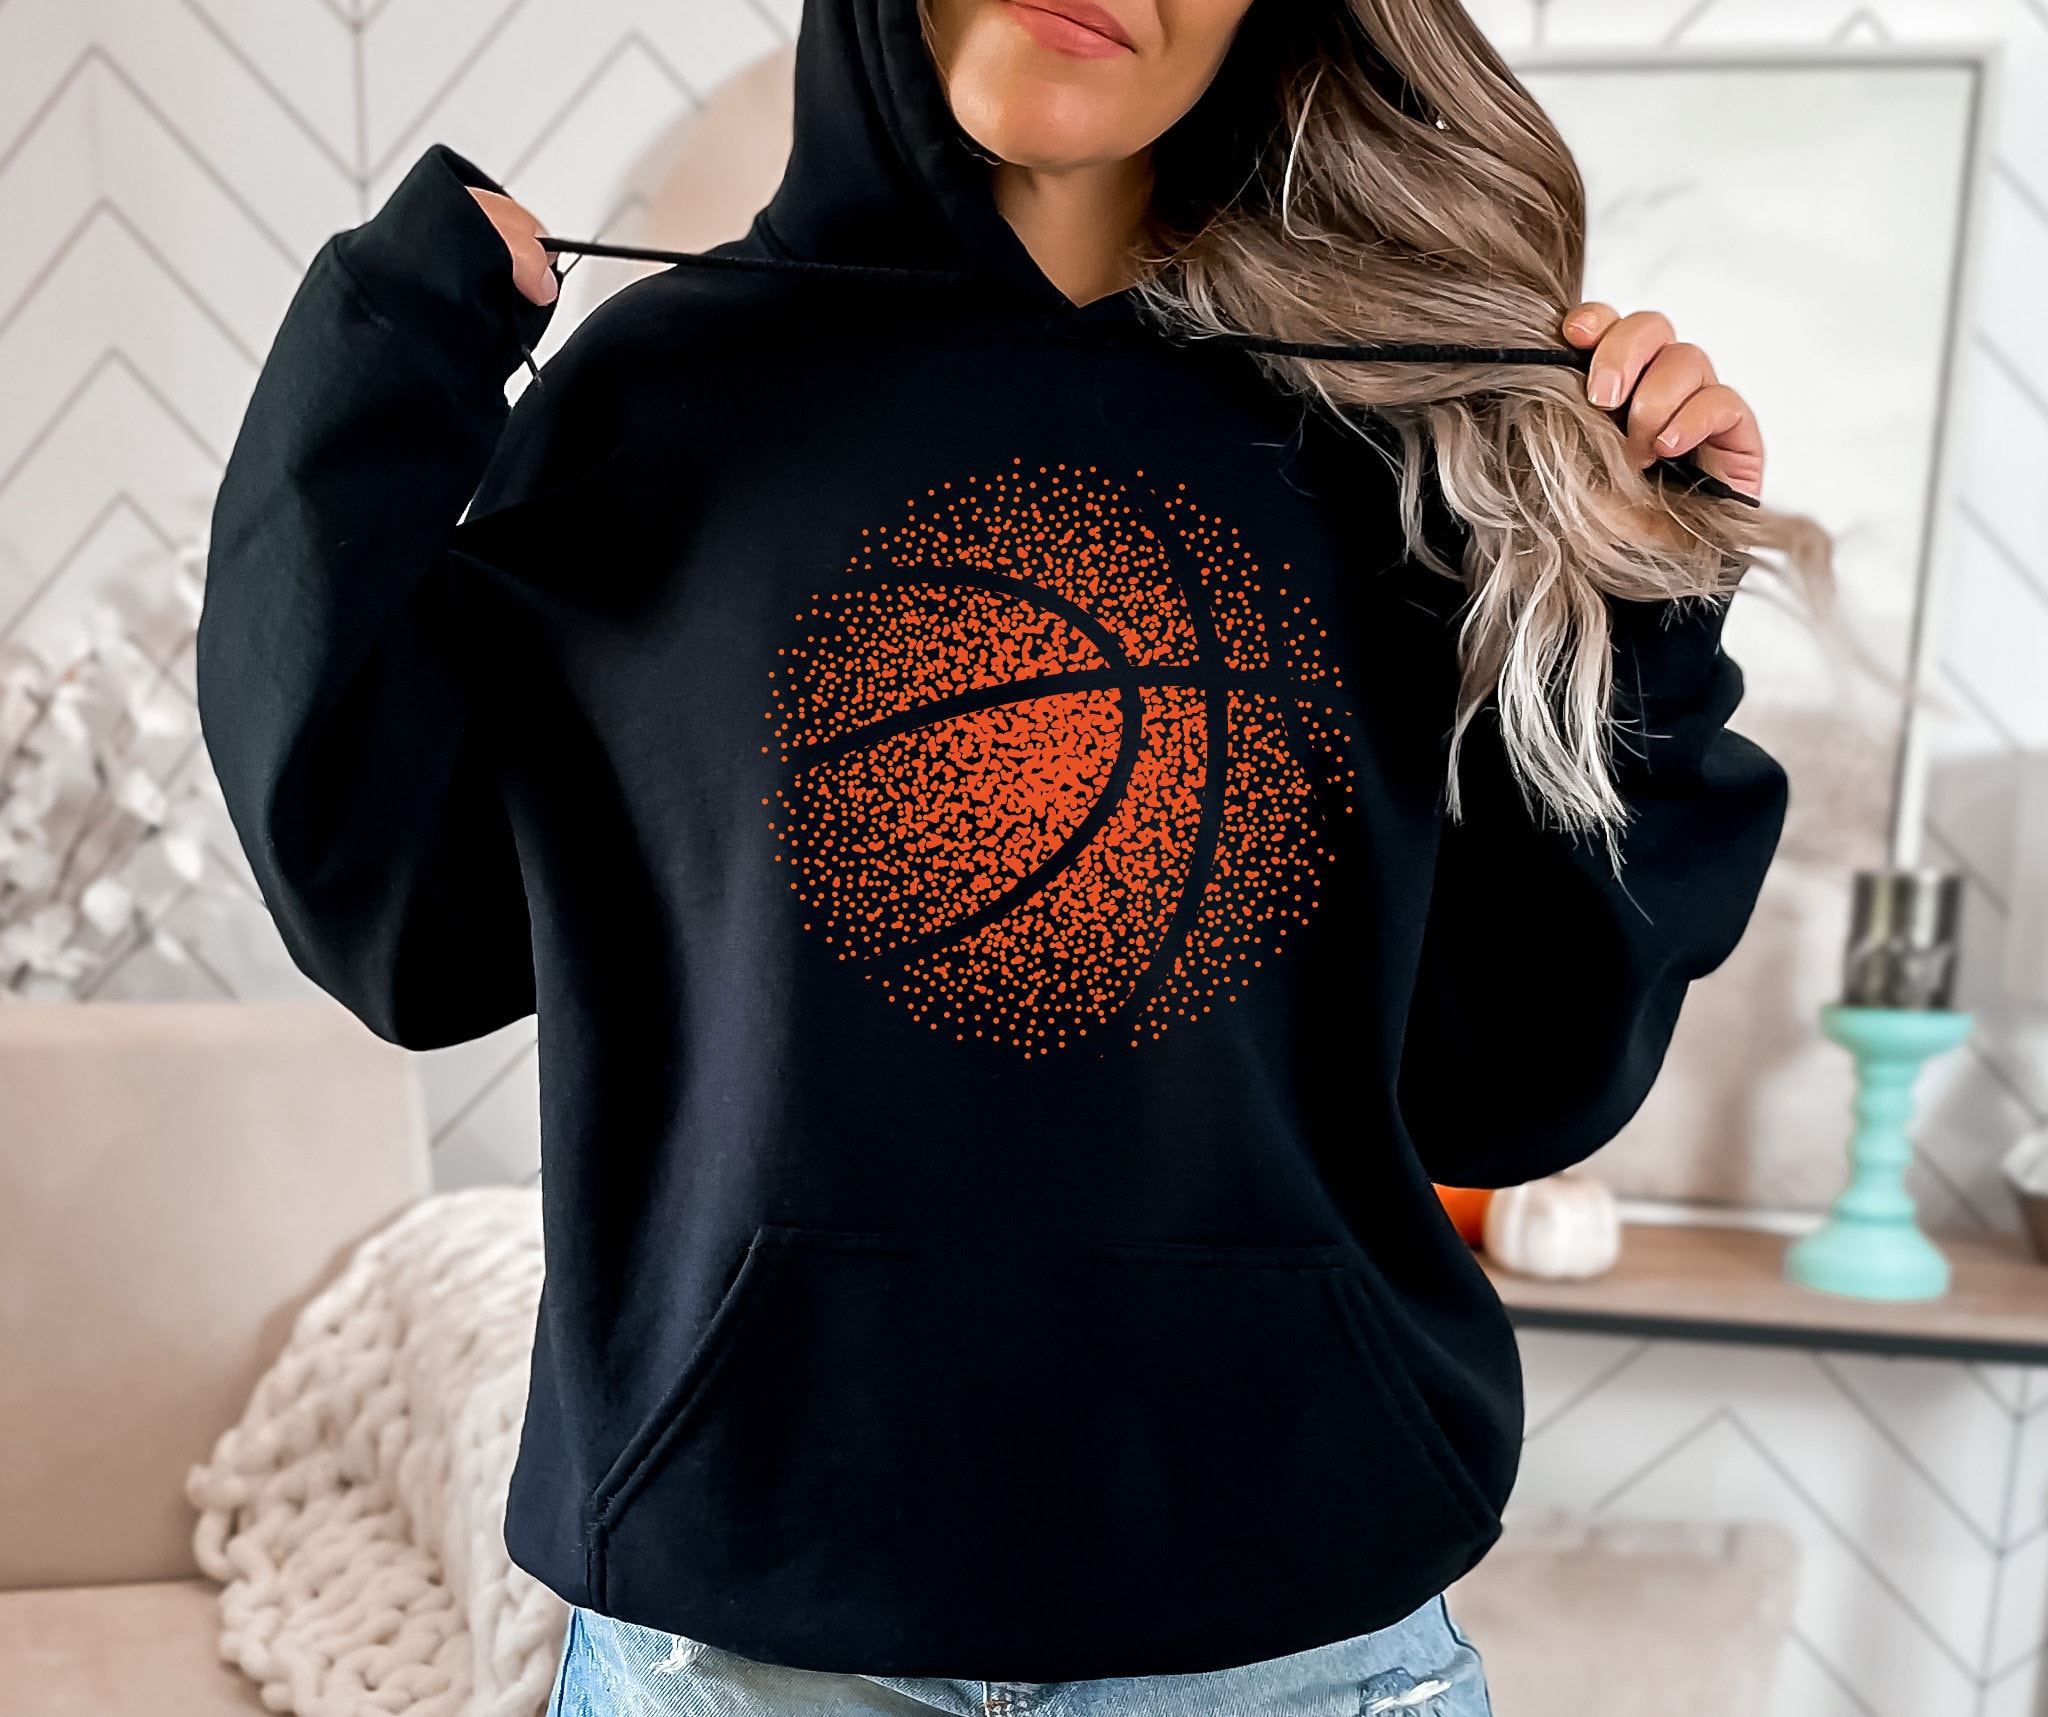 Basketball Hoodies & Sweatshirts, Unique Designs